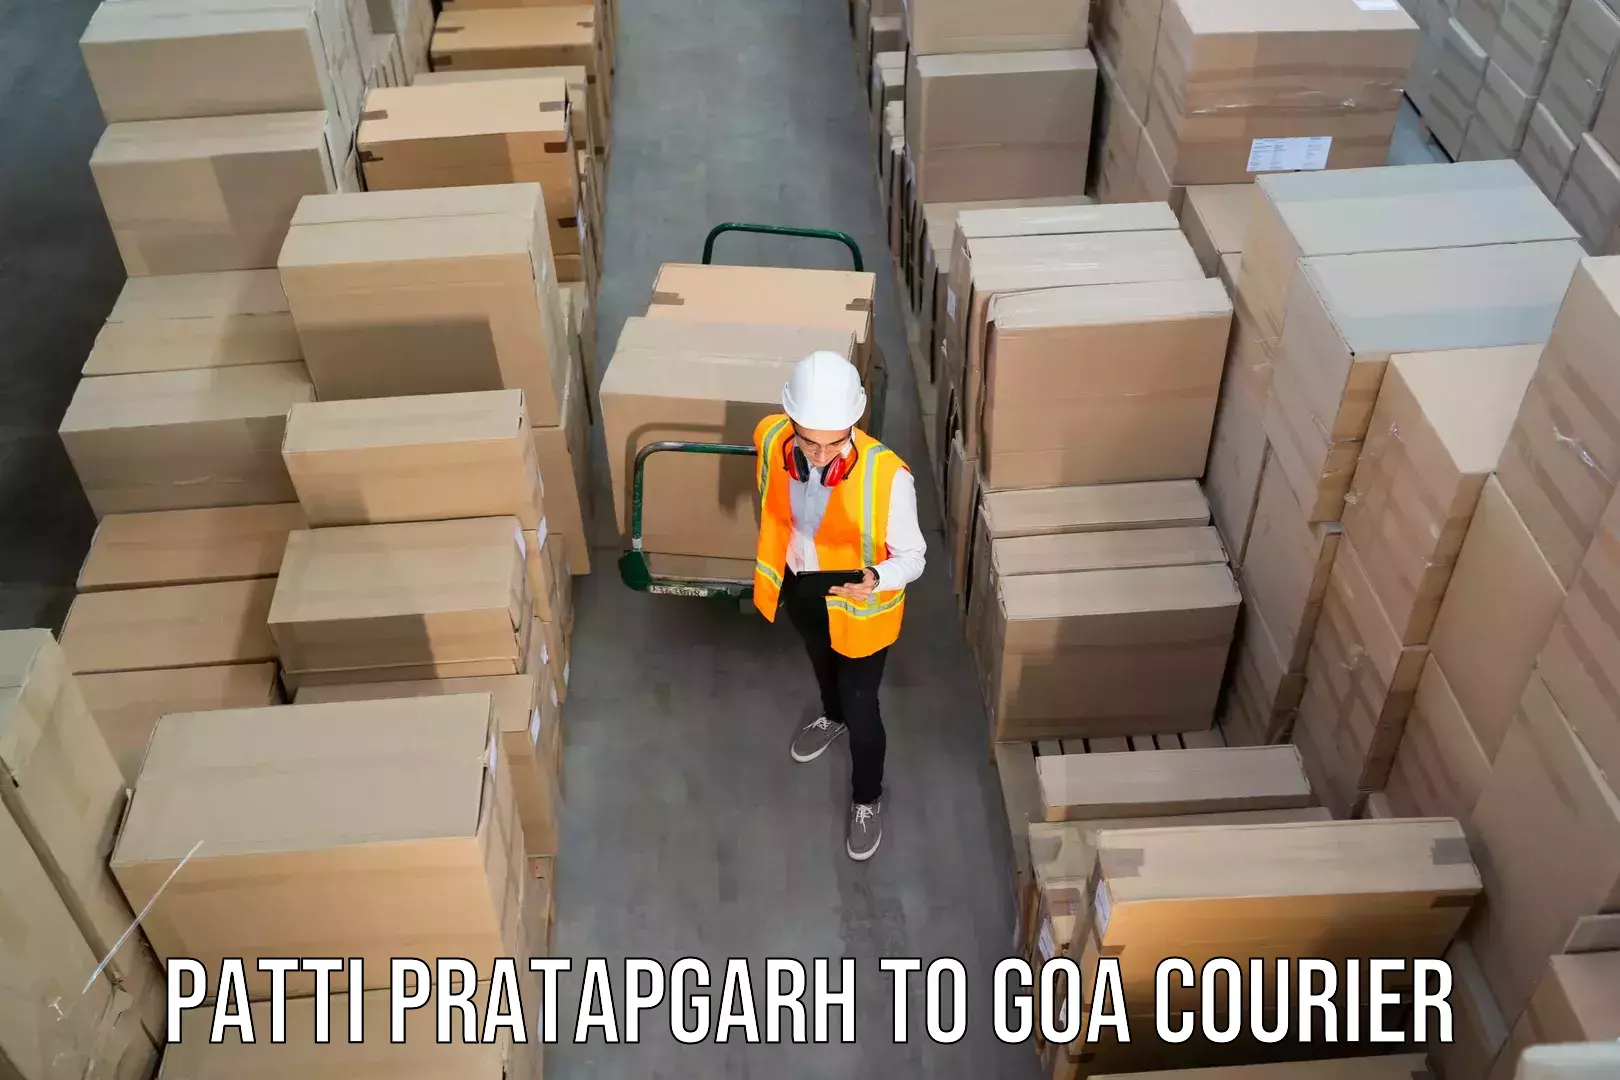 Efficient order fulfillment Patti Pratapgarh to Panjim